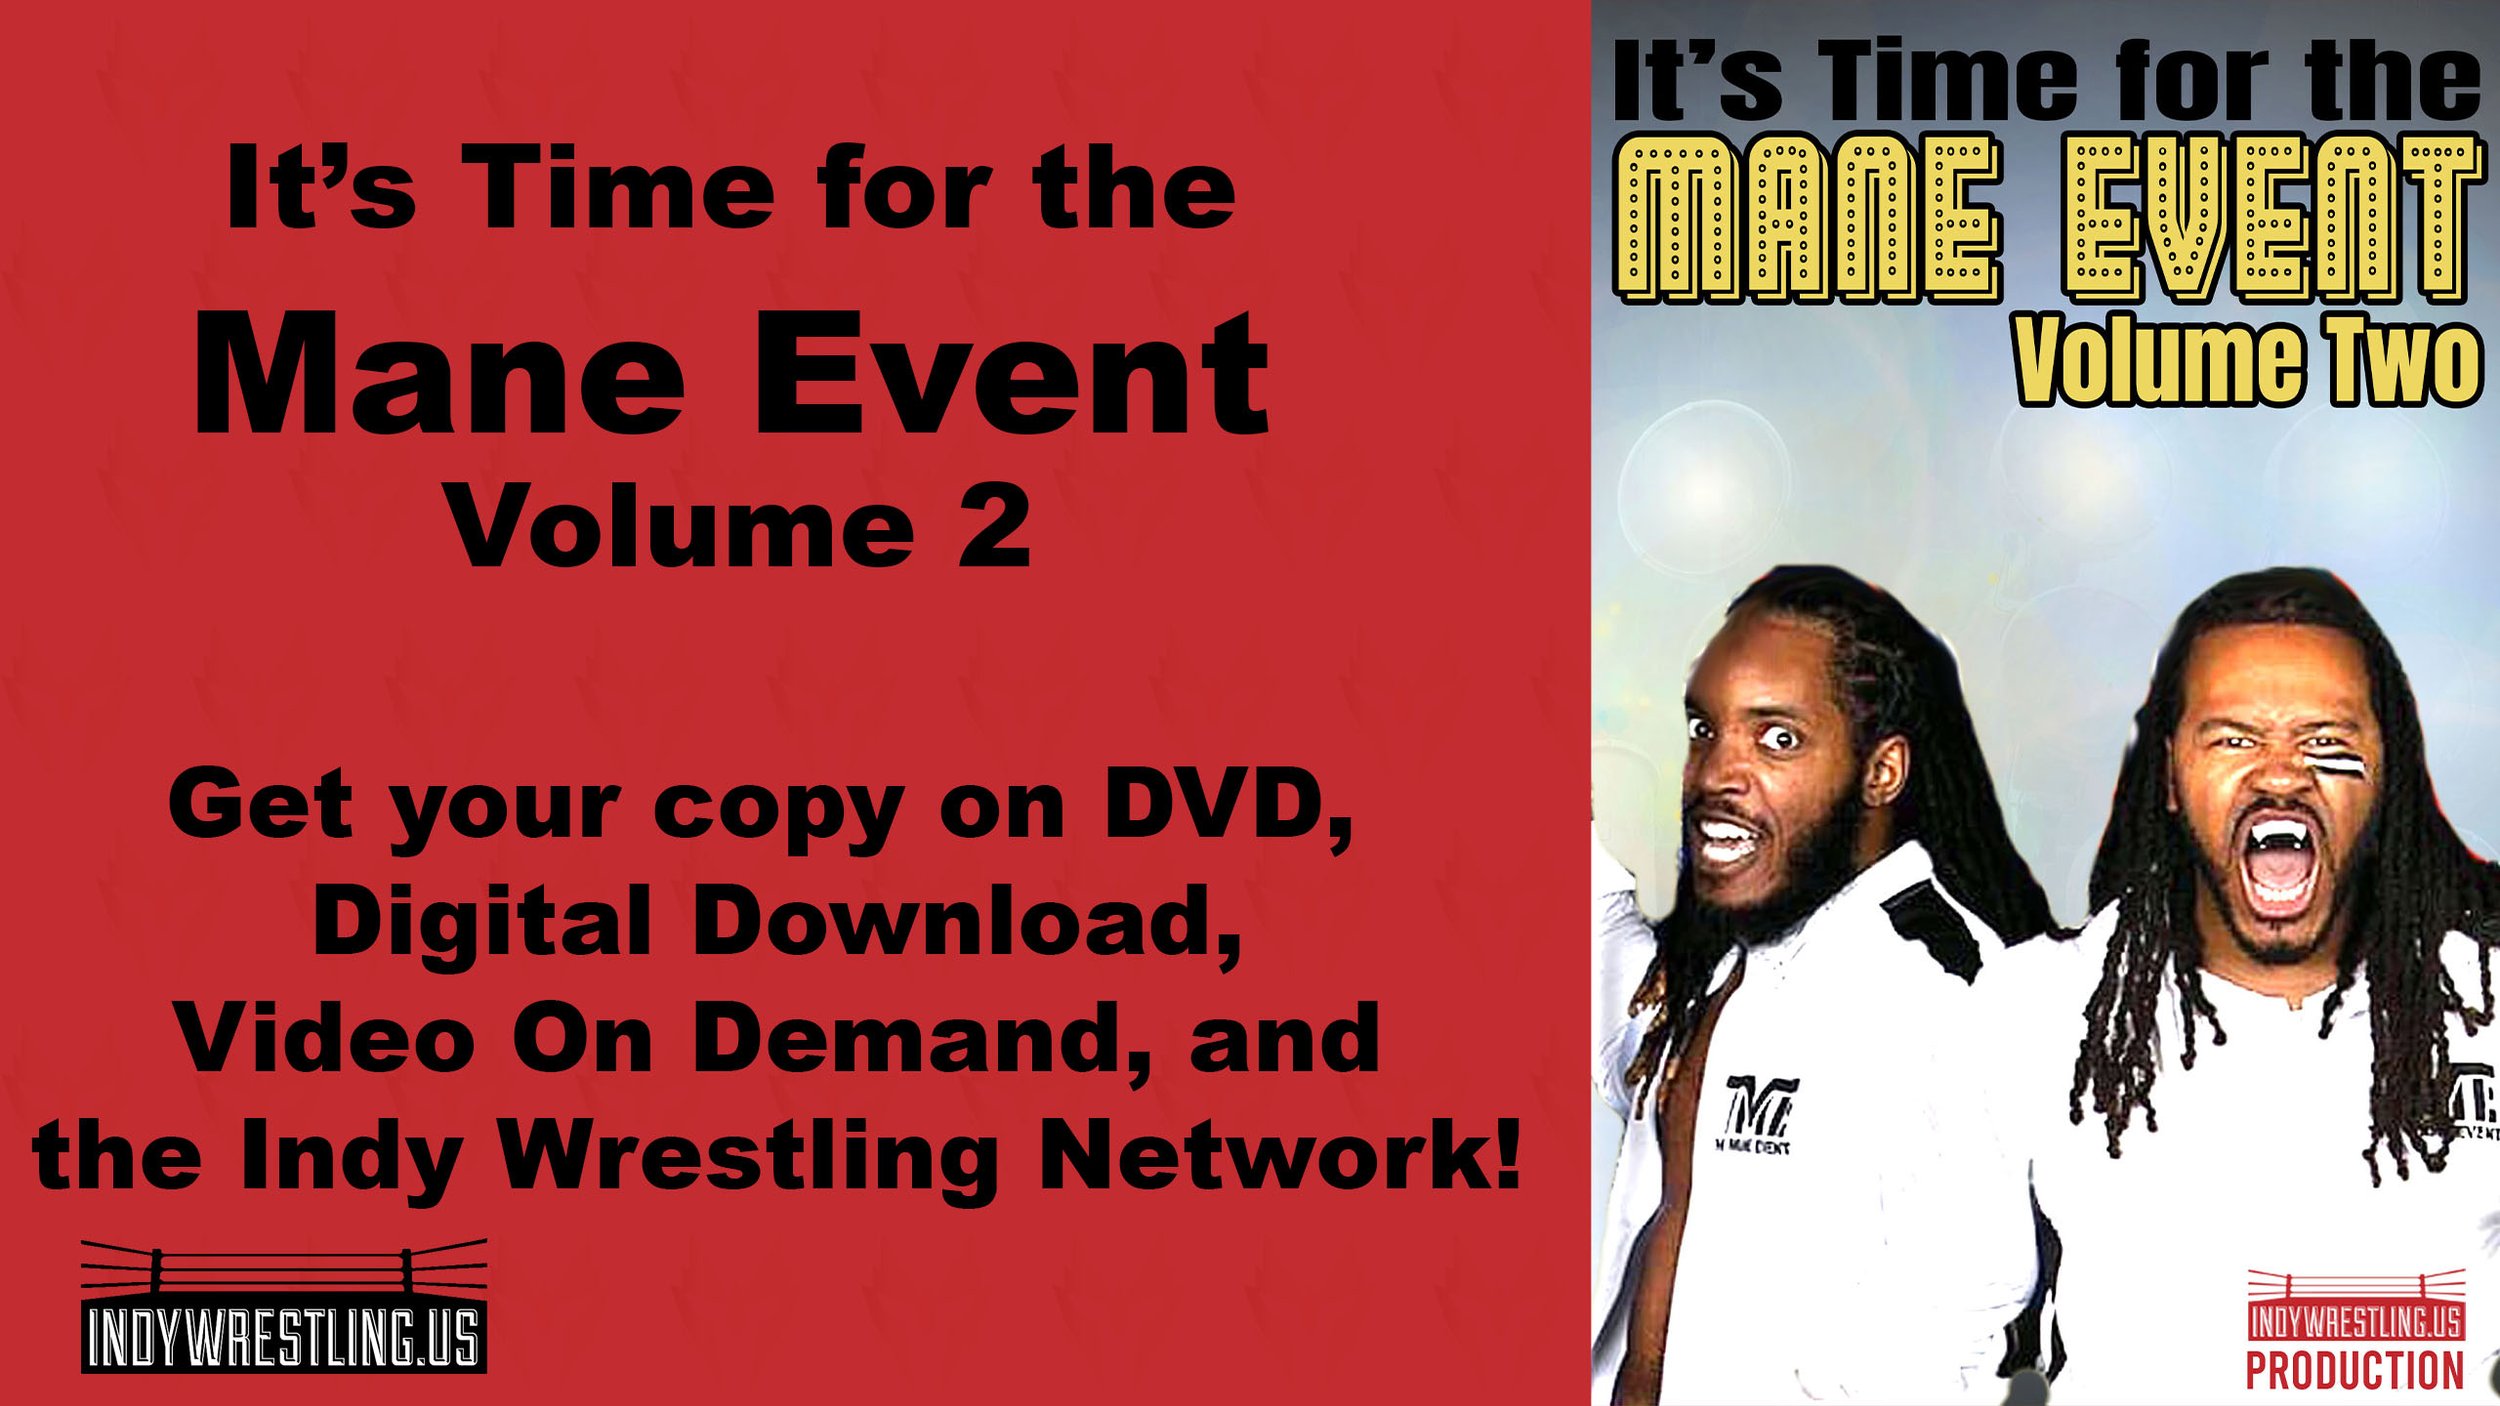 TME - Vol 2 - Indy Wrestling Rotating Banner.jpg